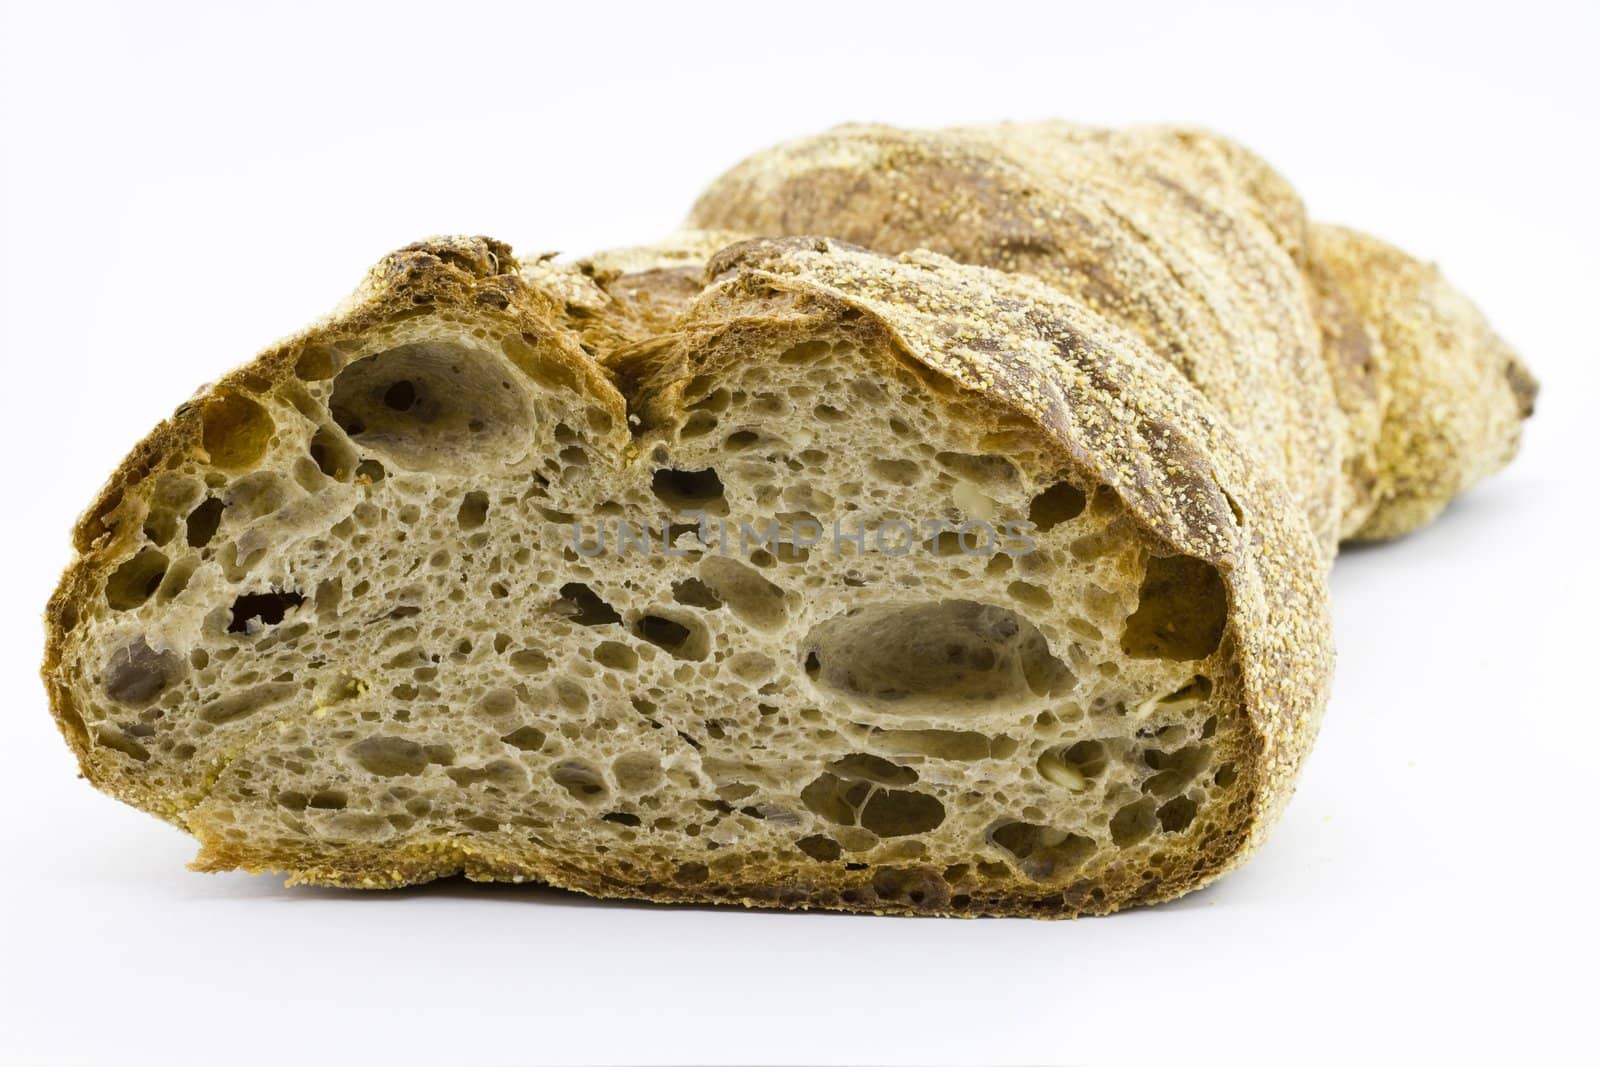 Fresh german bread on light background by gewoldi